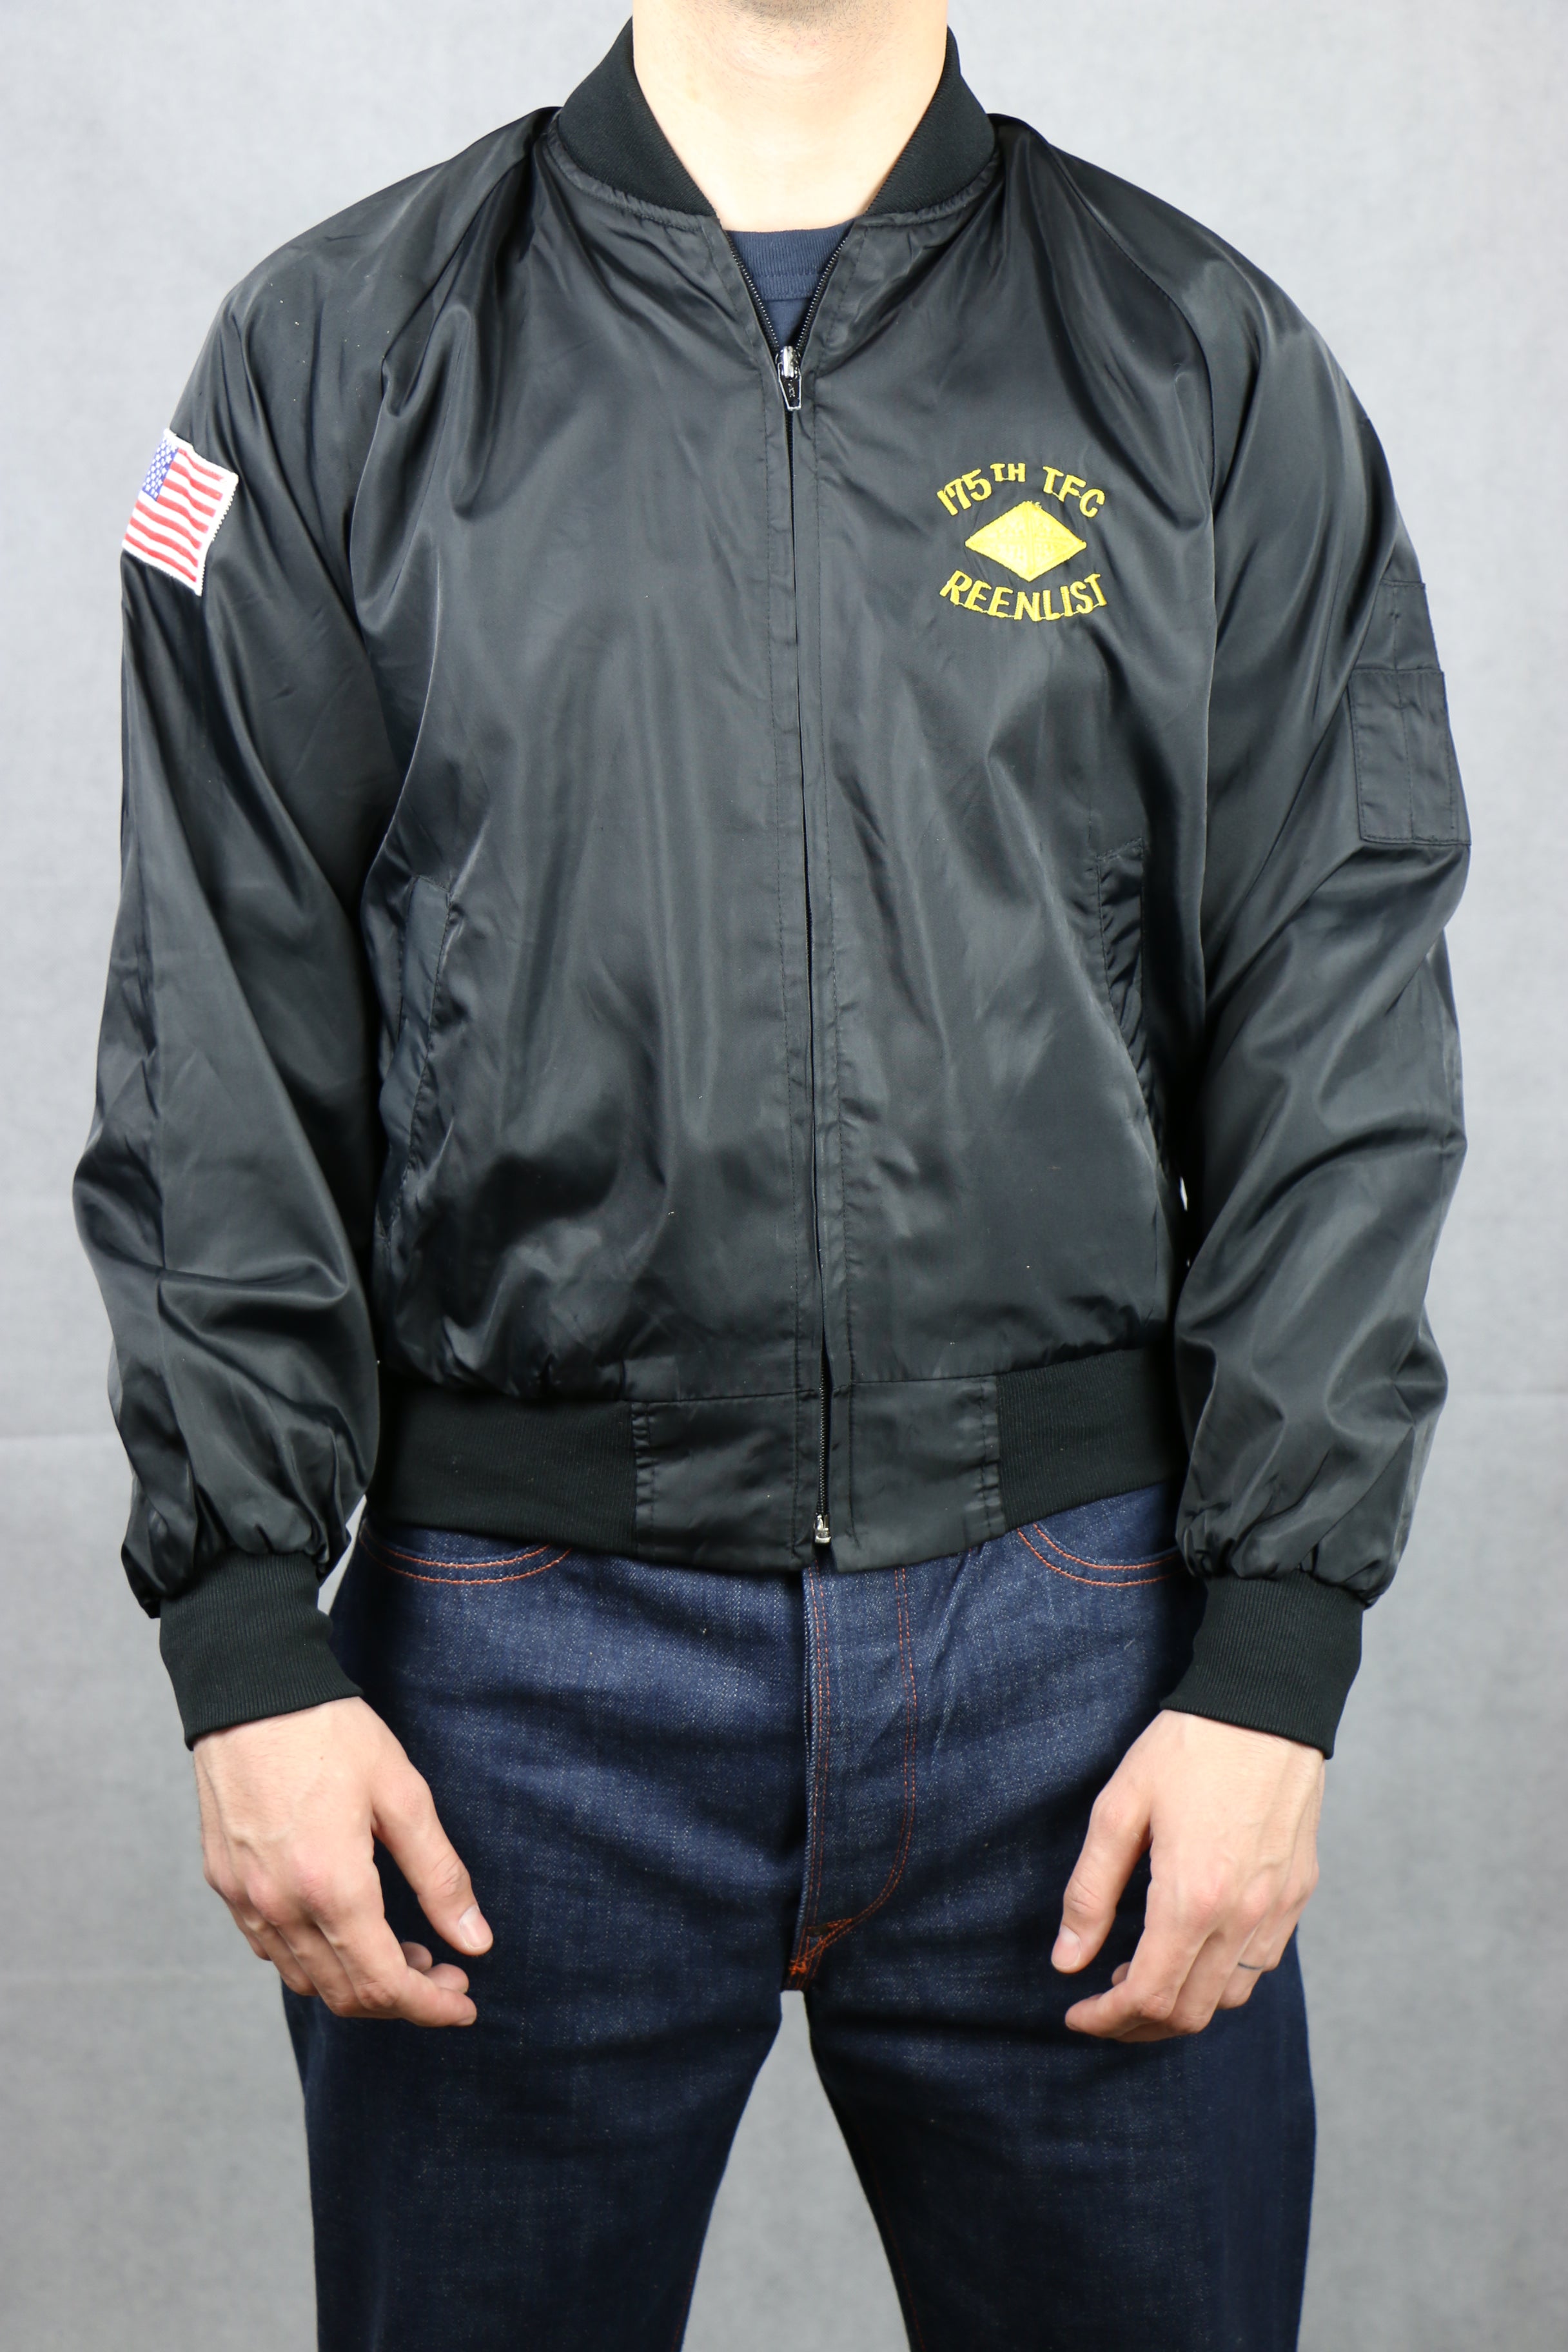 Satin Black Bomber Jacket (Reen) - vintage clothing clochard92.com